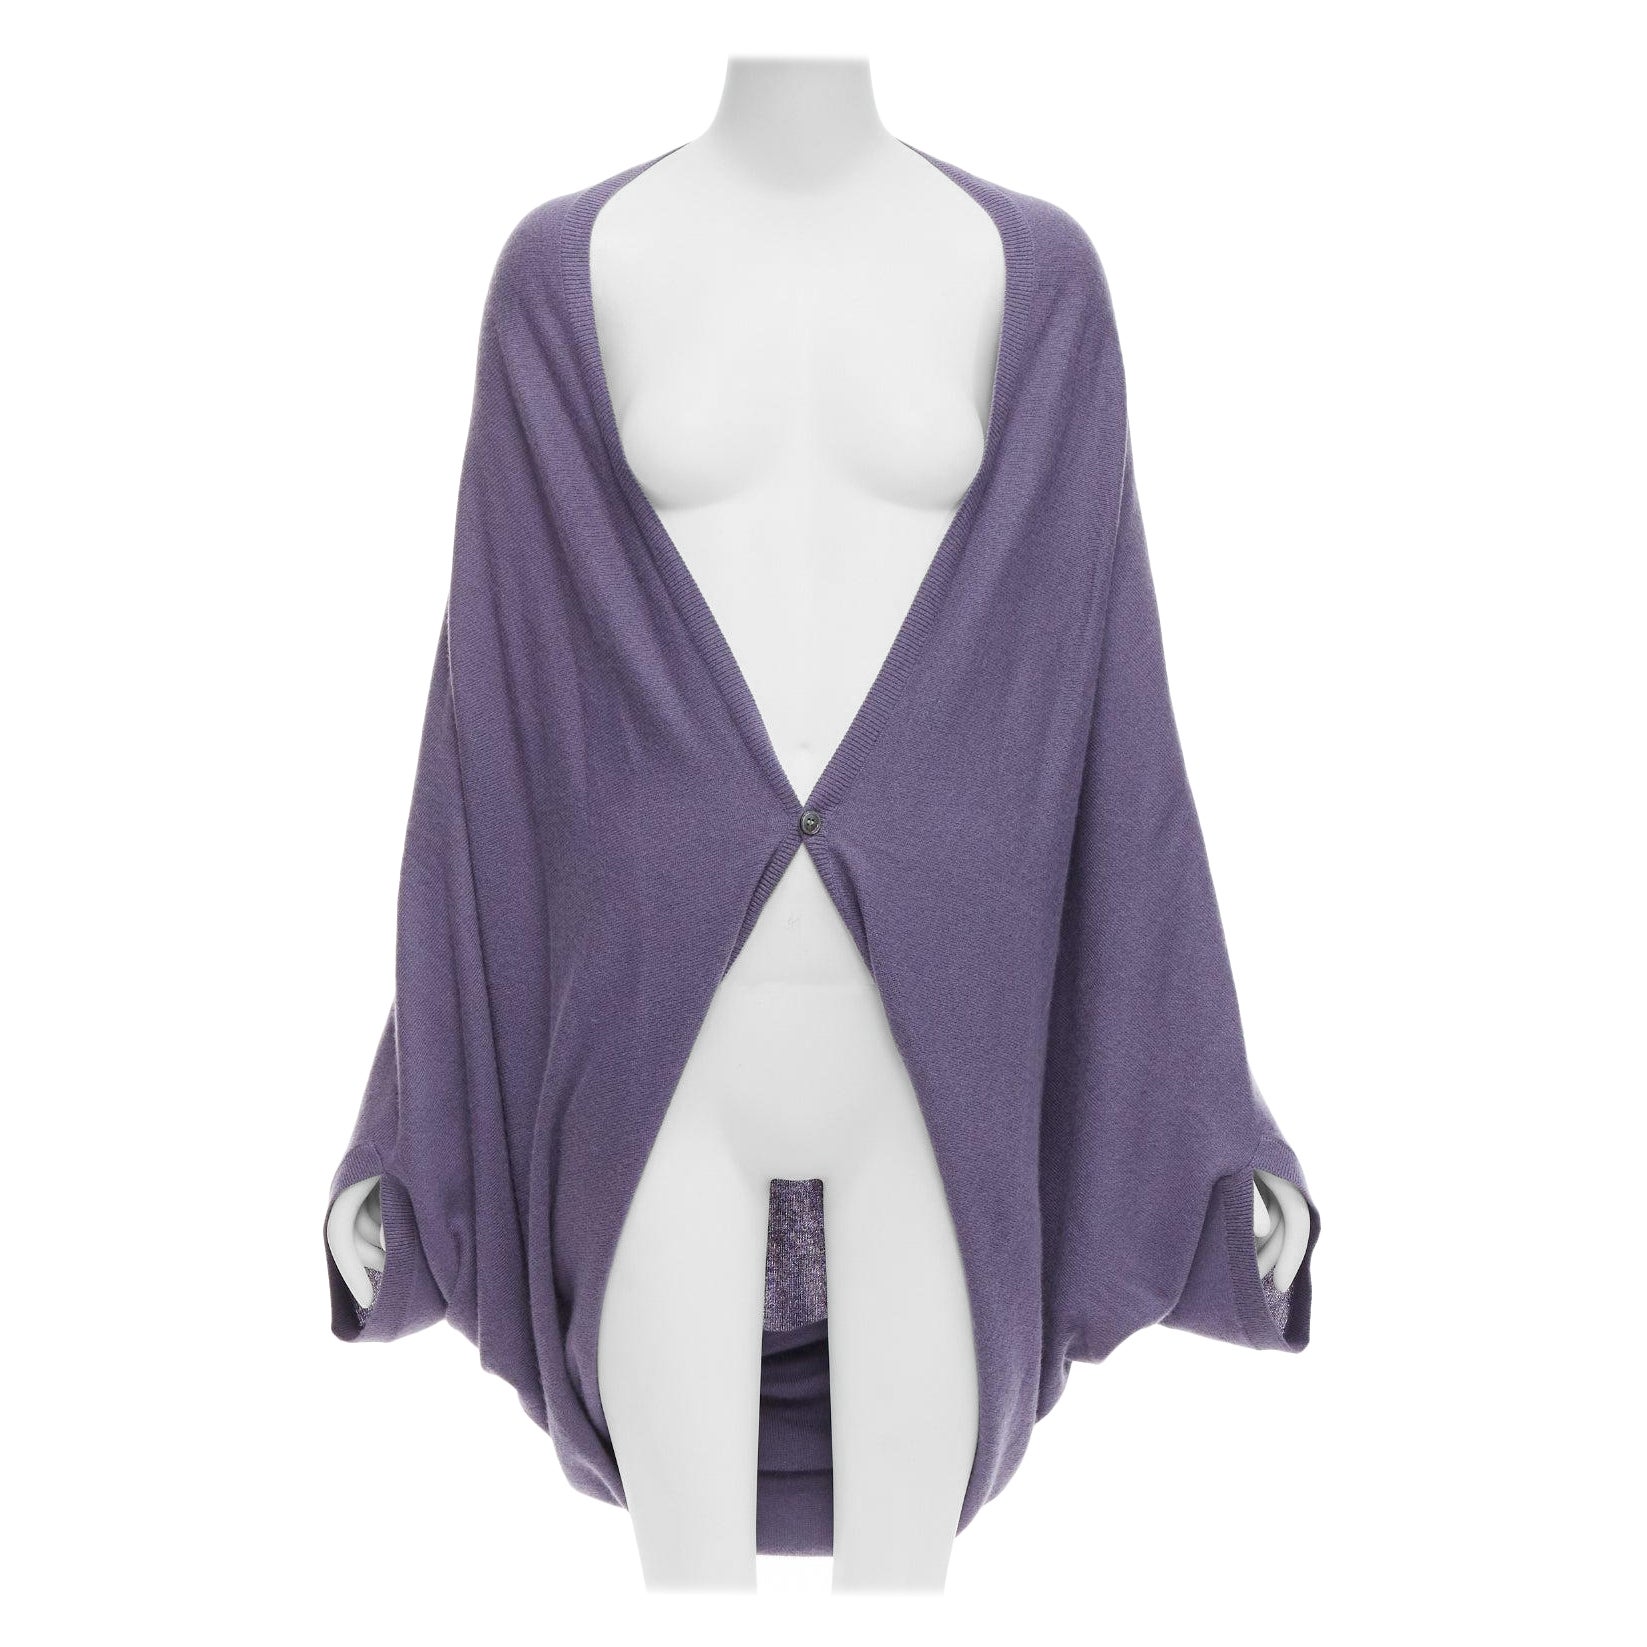 TSE 100% pure cashmere purple low cut batwing shawl cardigan For Sale